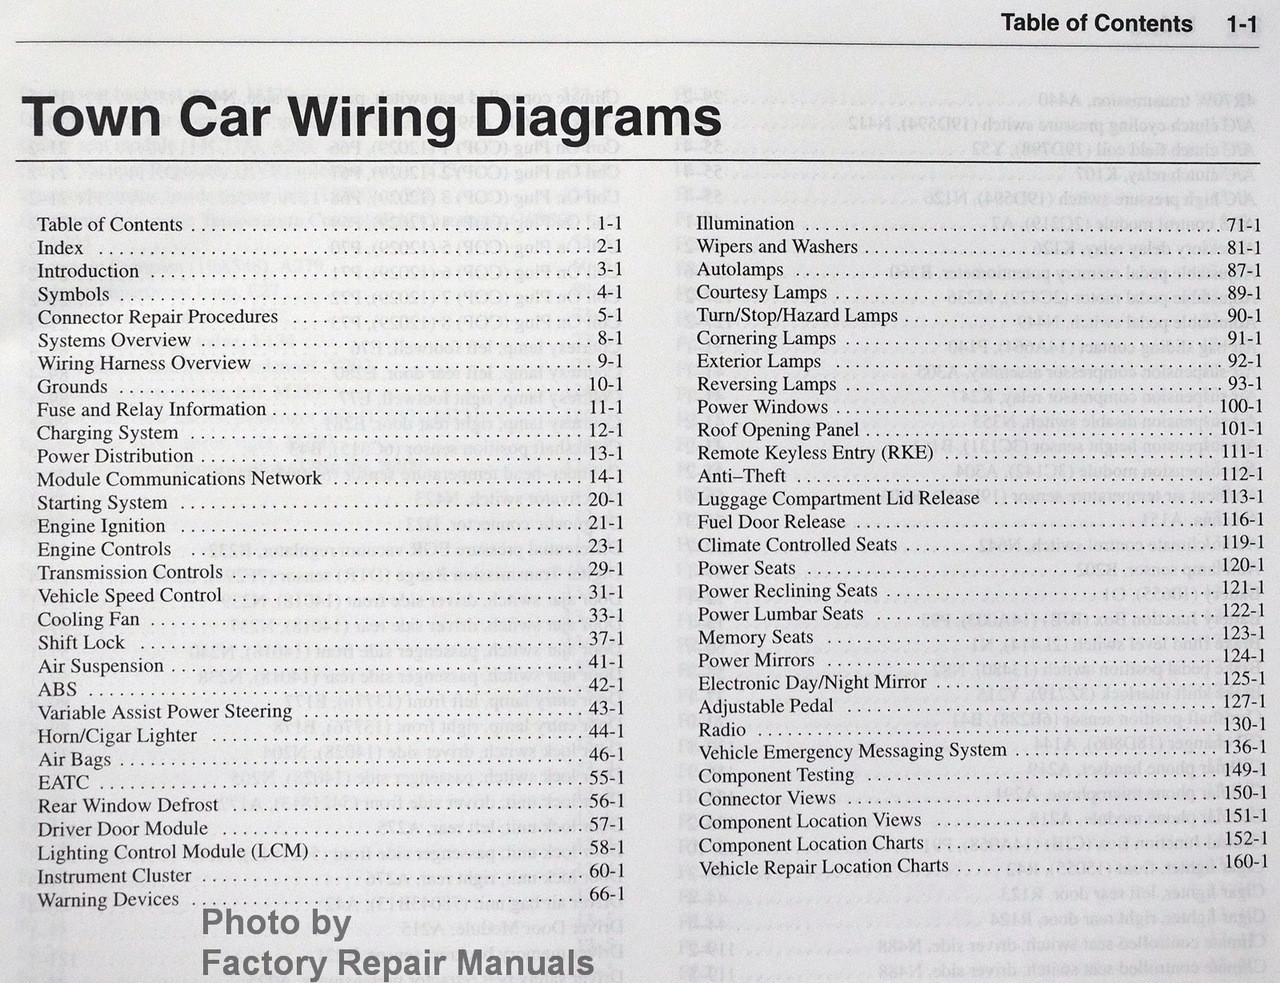 2002 Lincoln Town Car Electrical Wiring Diagrams - Original Ford Manual